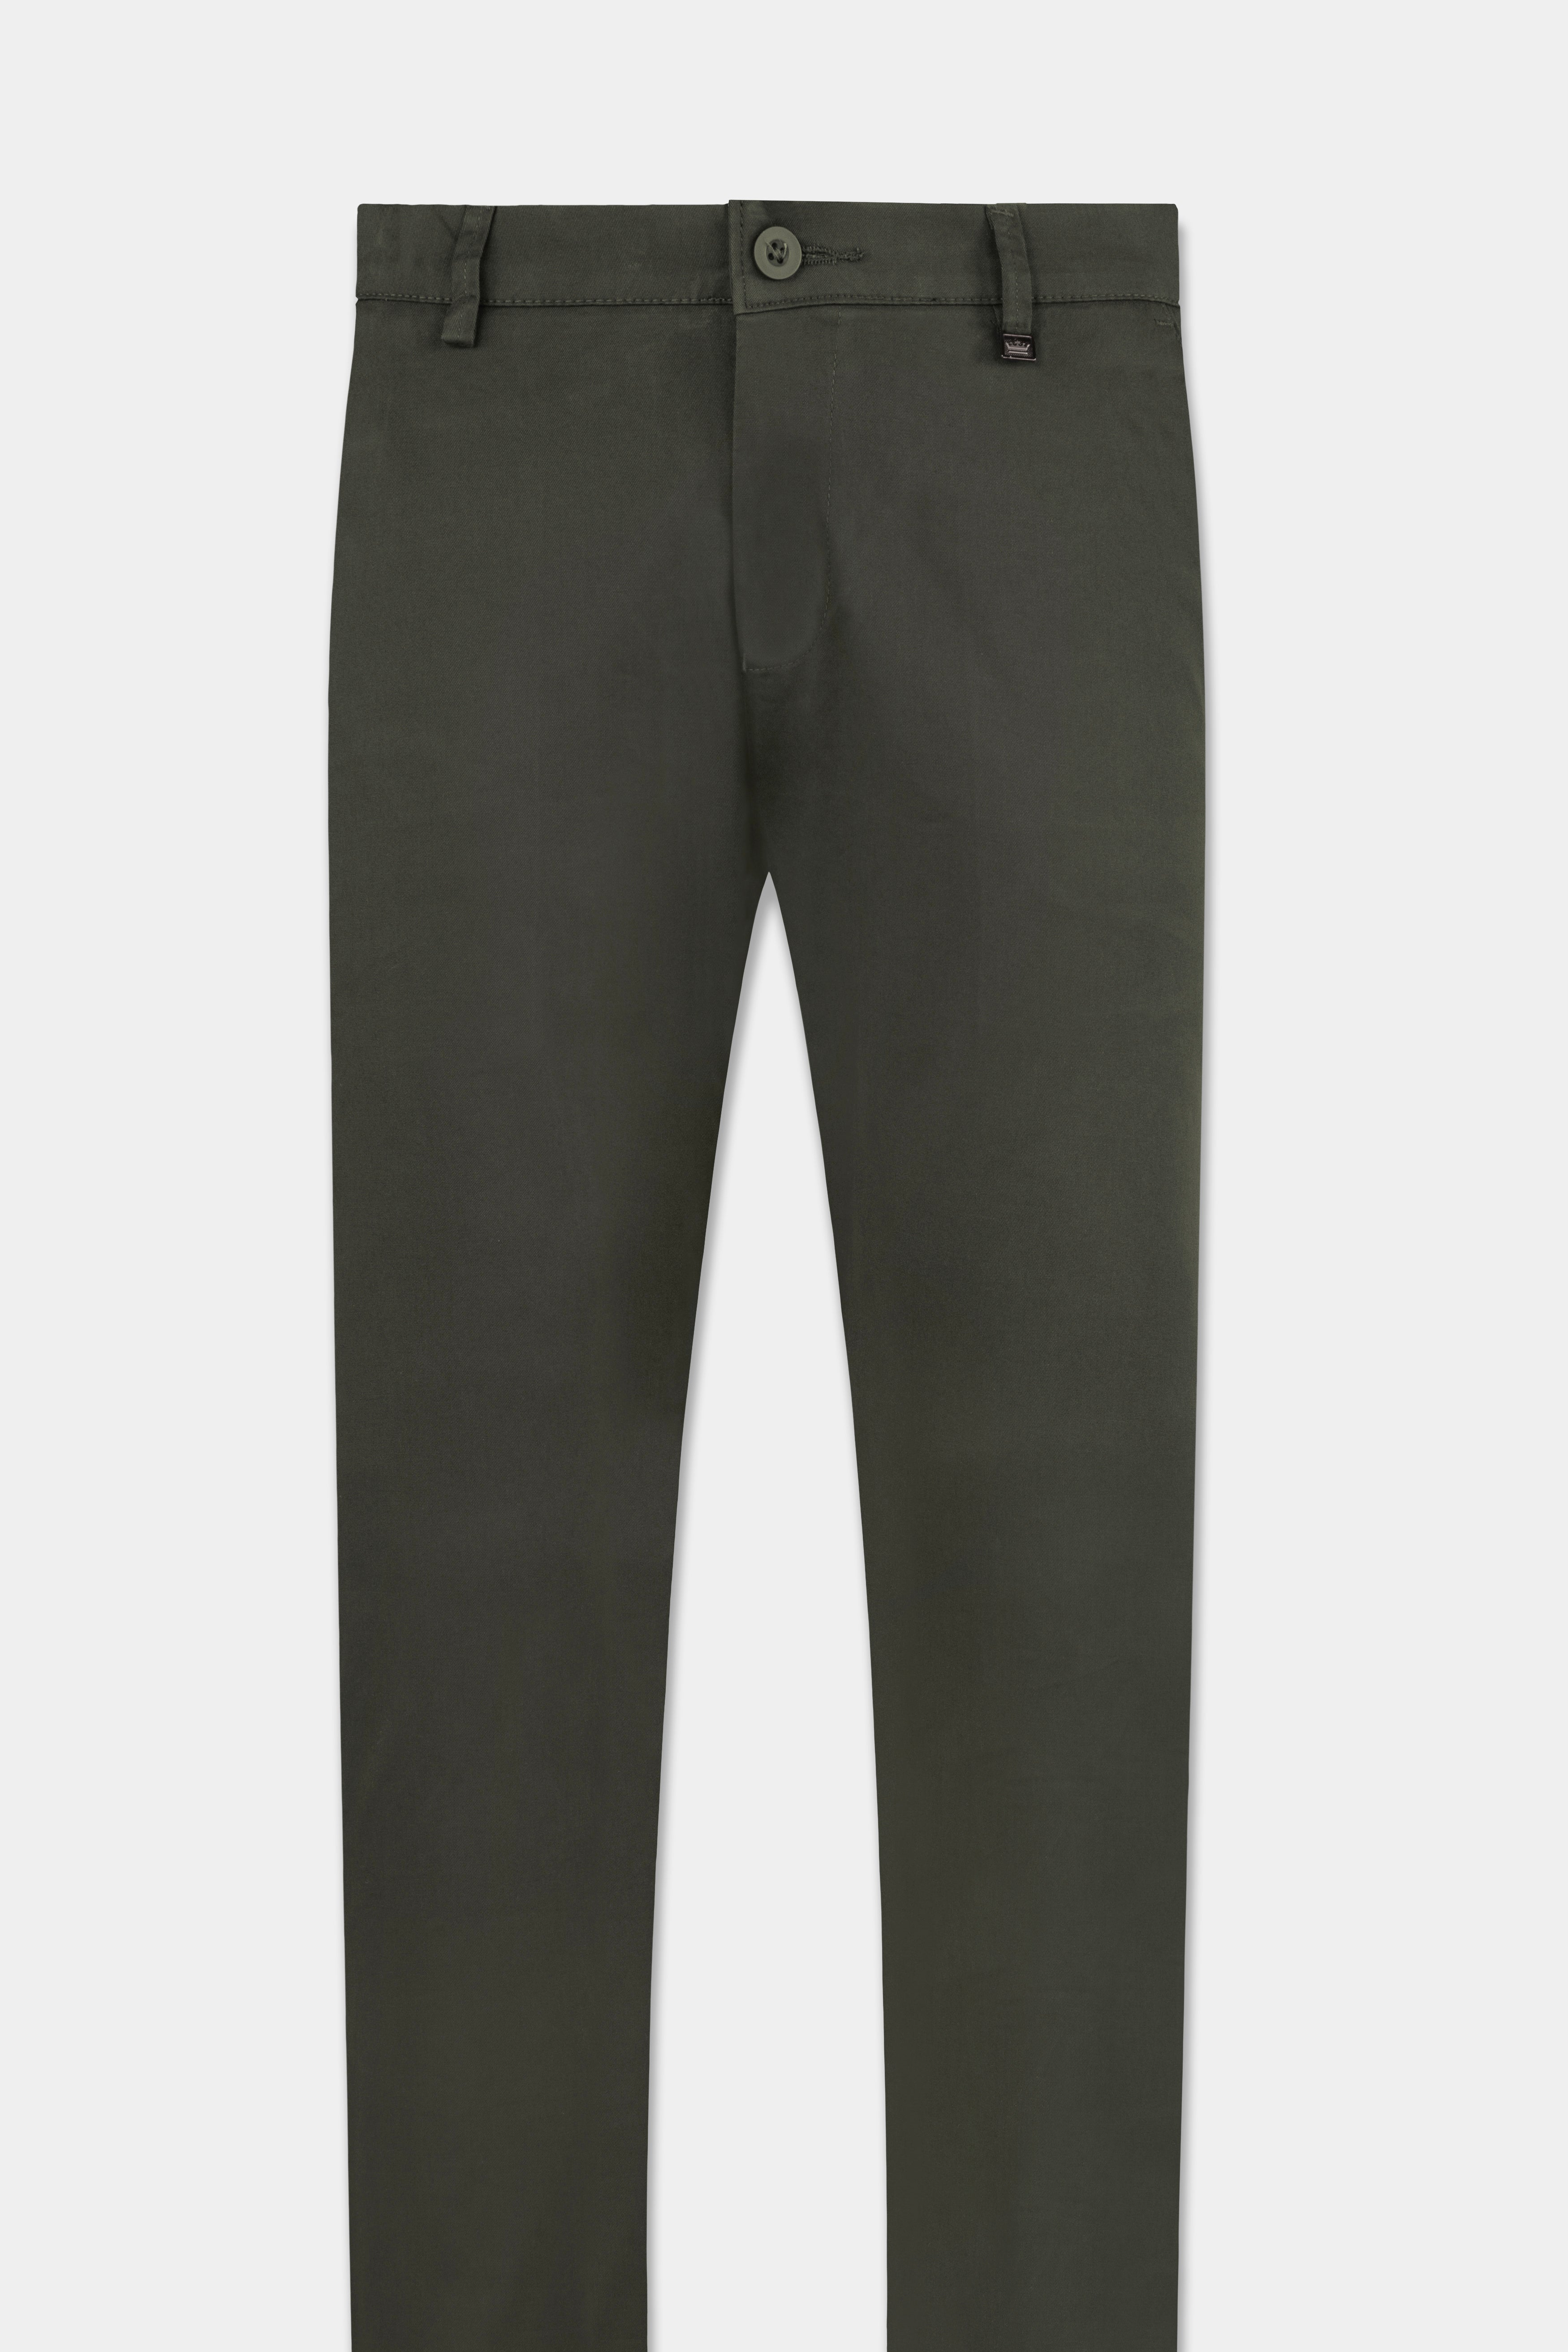 Banana Republic Men's Gray Pants | ShopStyle